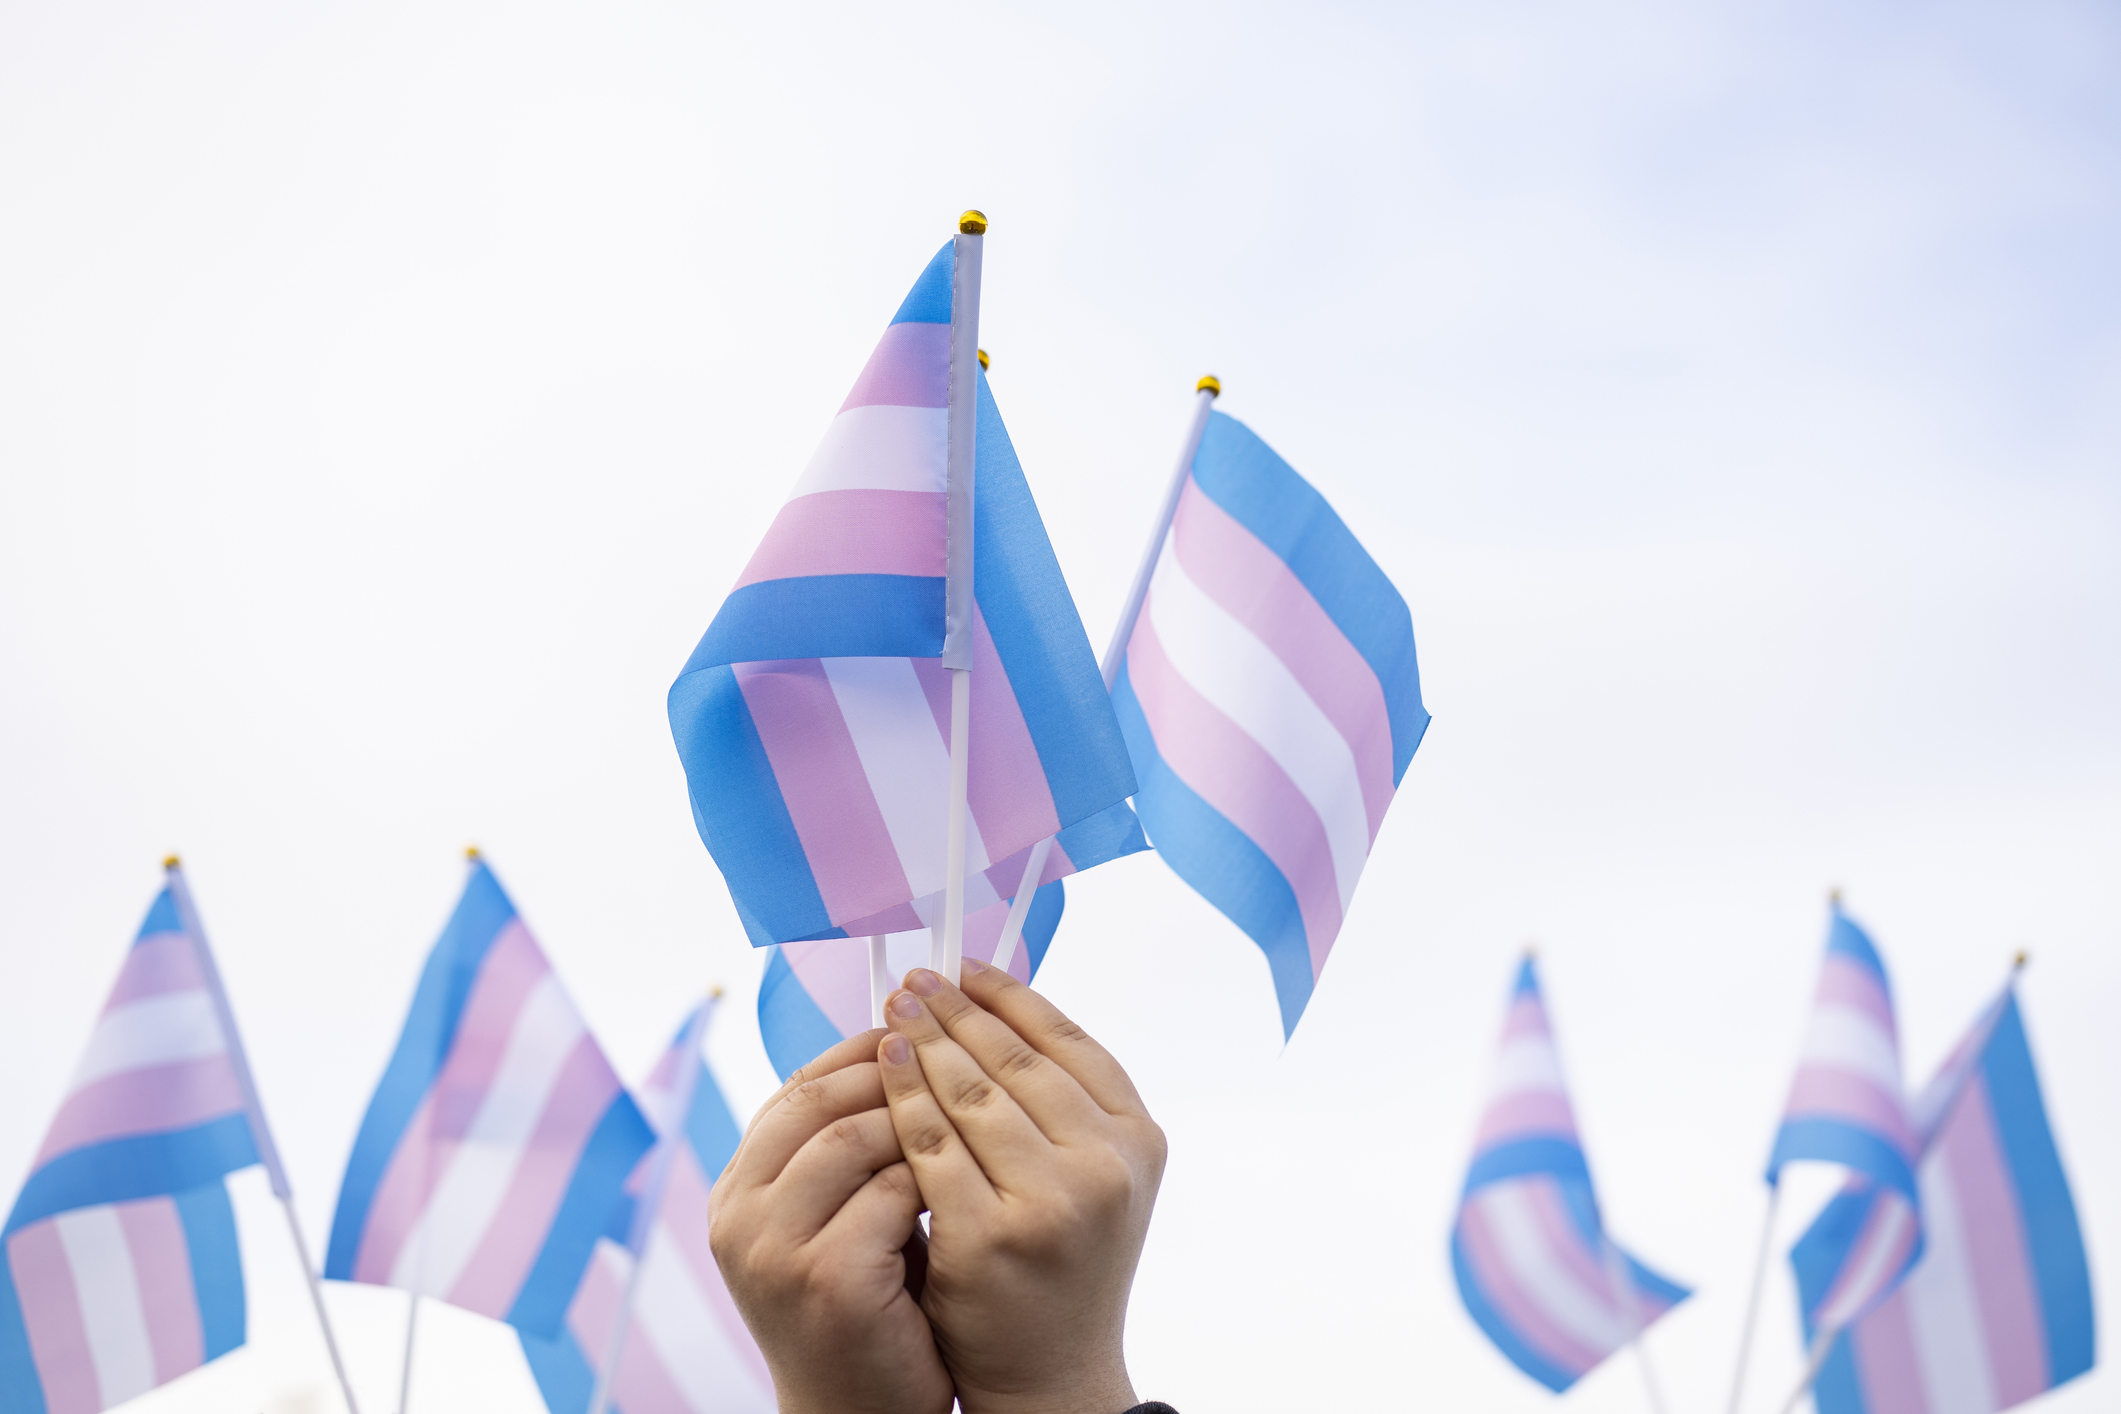 Sacramento Declares Itself Sanctuary City For Trans-Identifying People